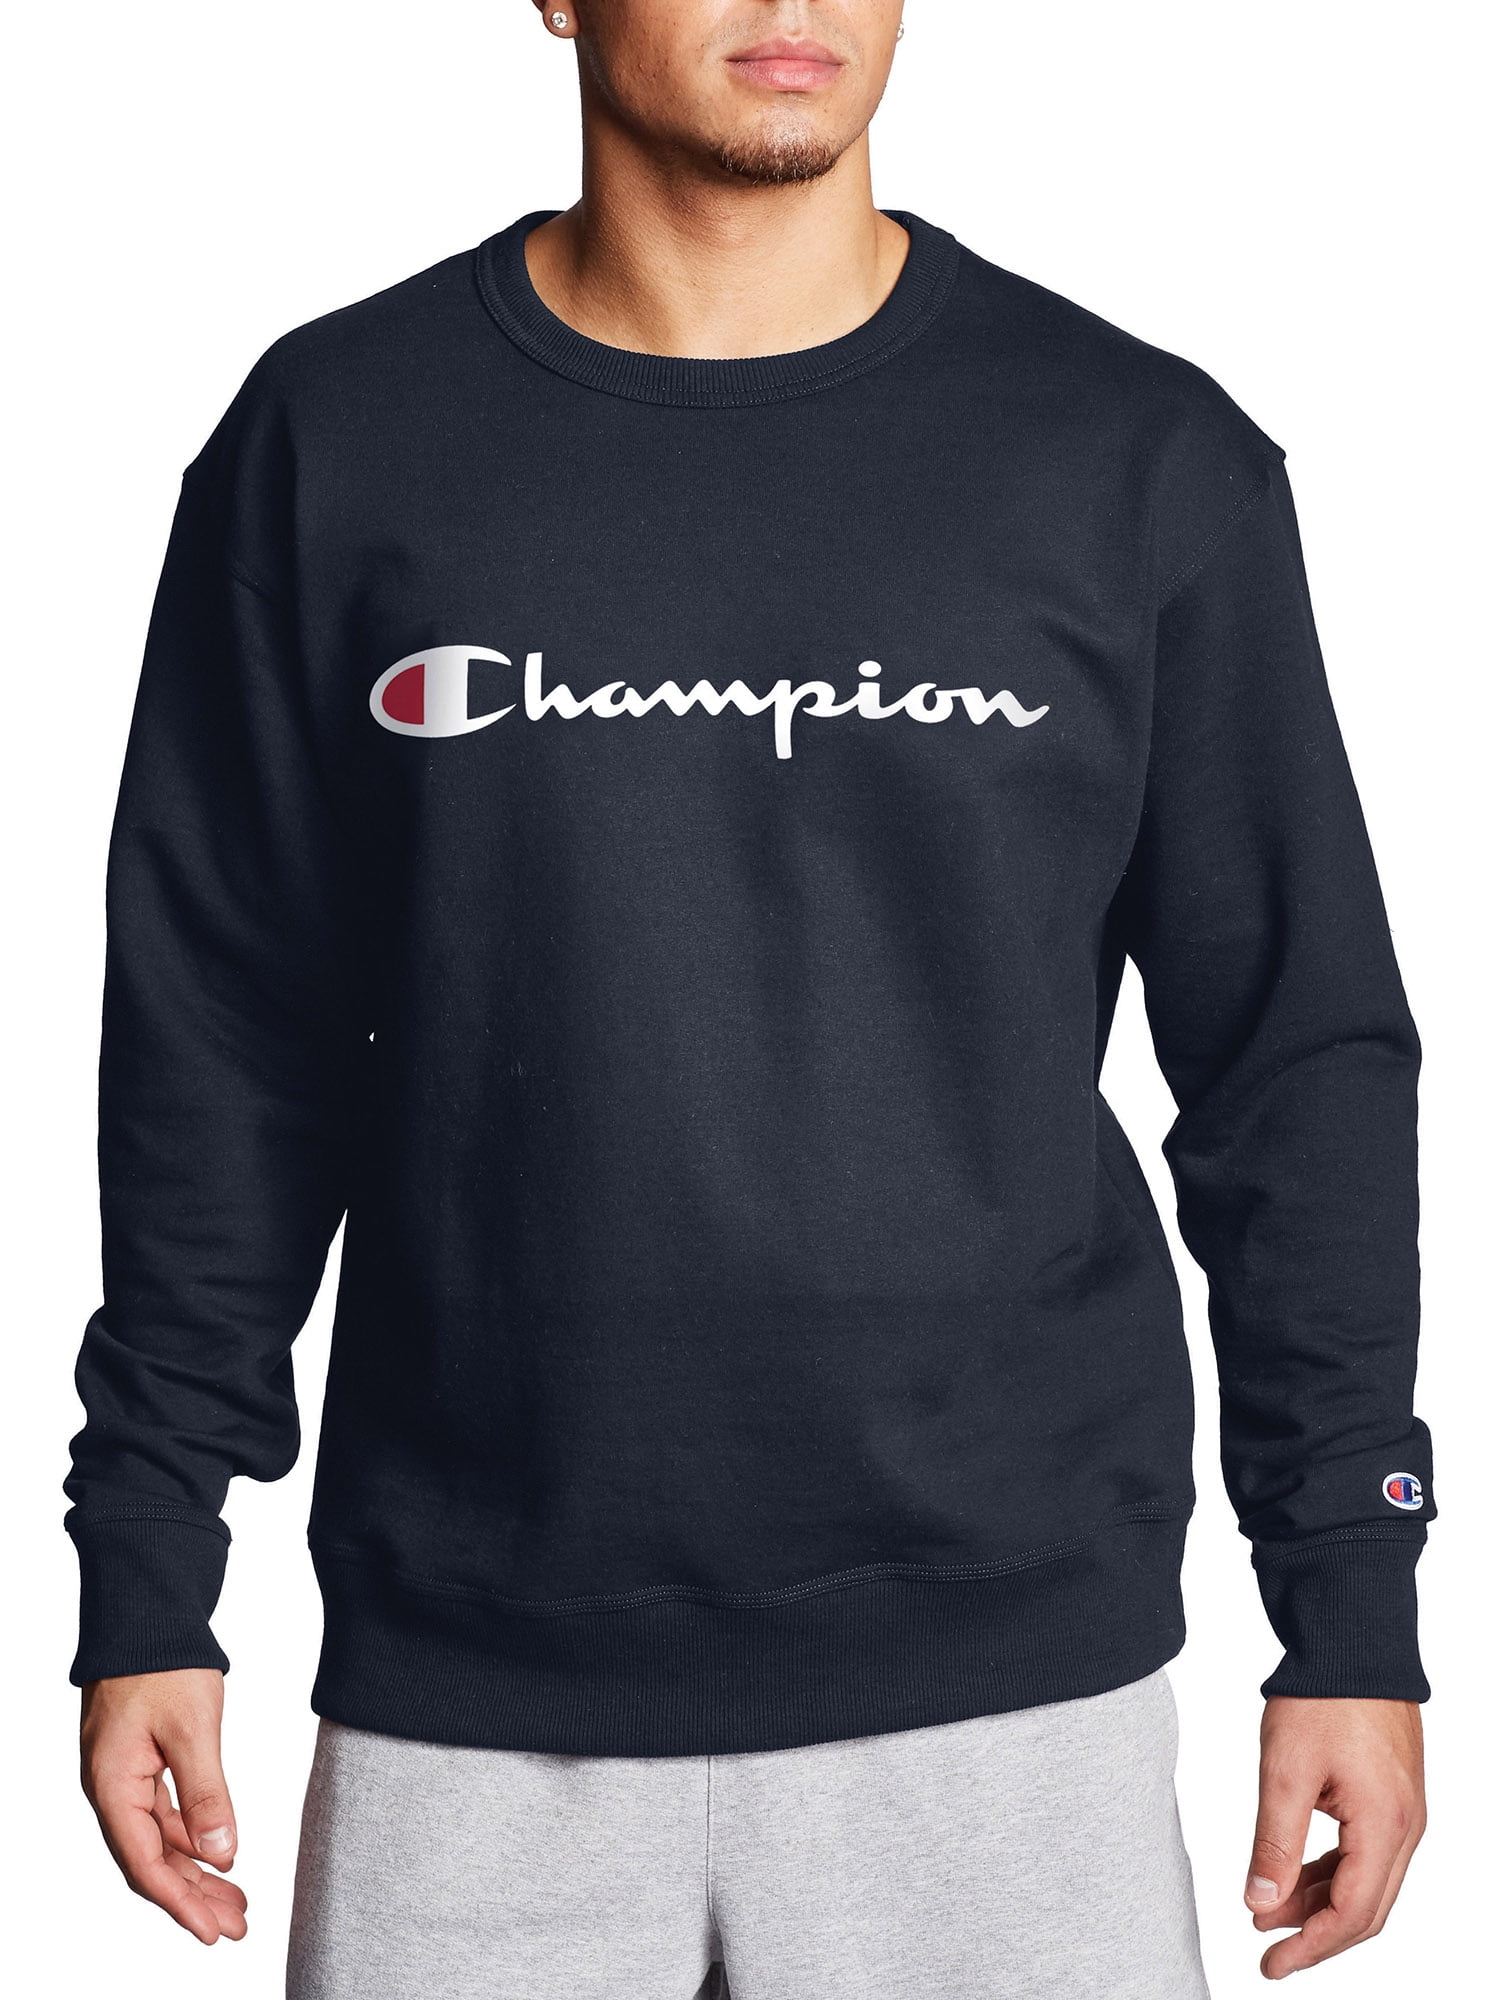 champion sweatshirt walmart